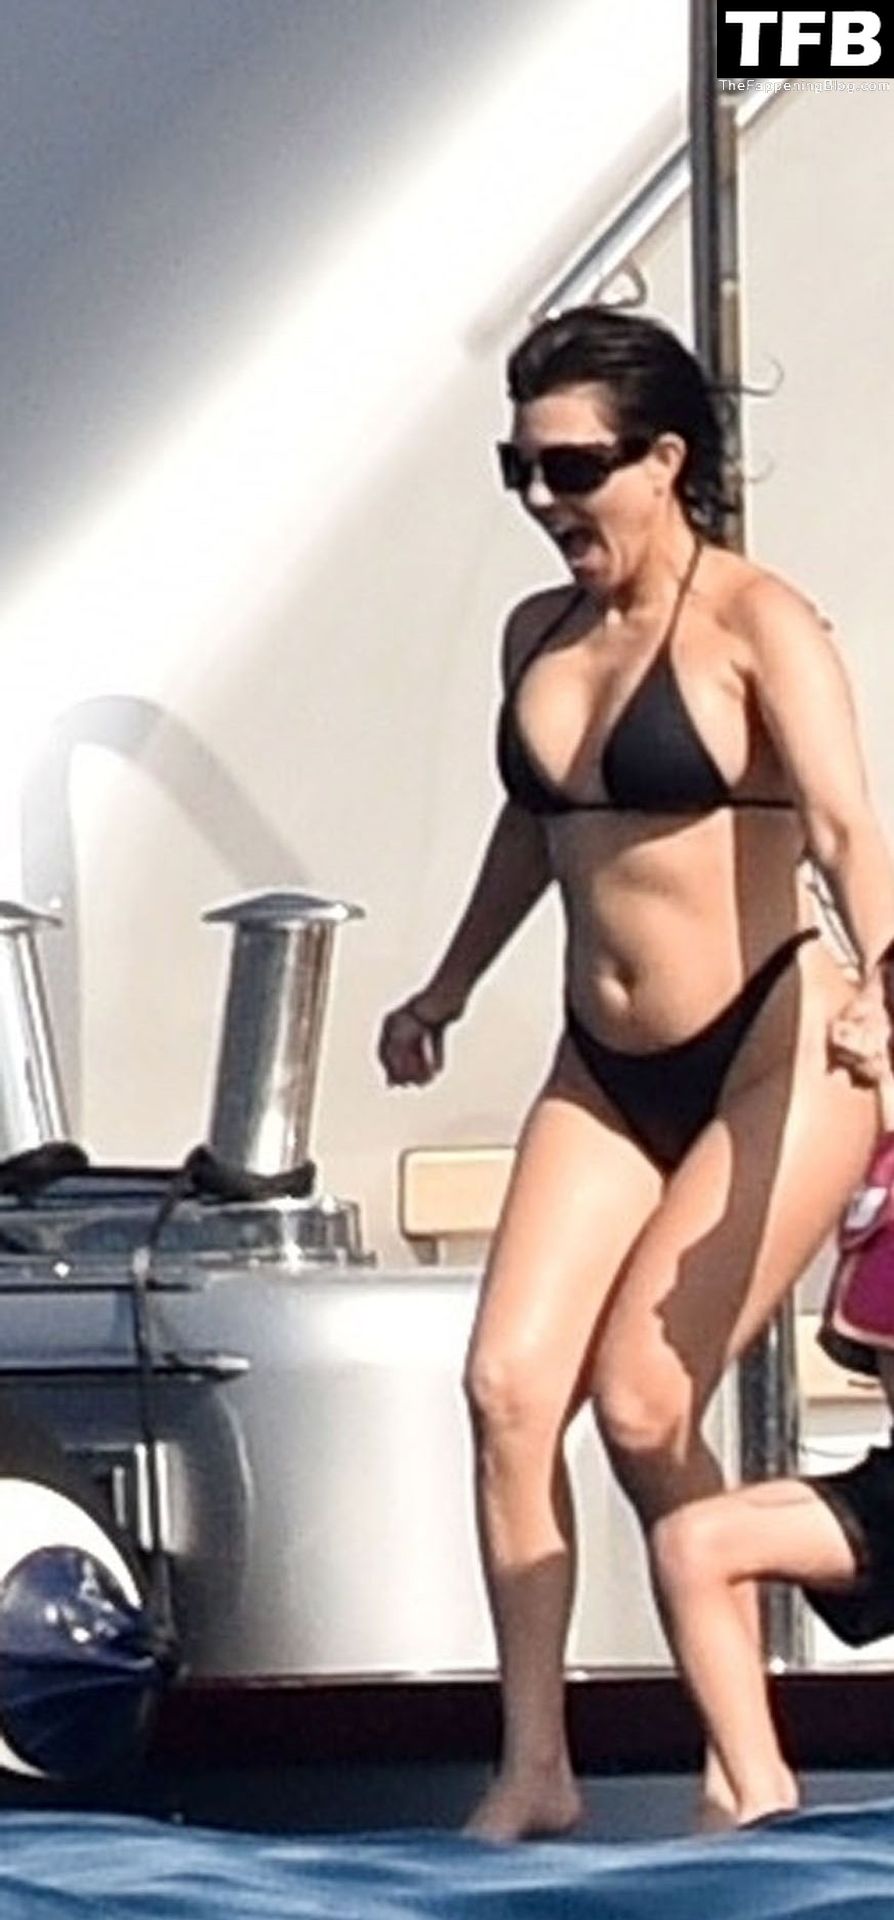 Kourtney Kardashian Sexy The Fappening Blog 8 1 - Kourtney Kardashian Shows Off Her Toned Bikini Body While Enjoying Some Quality Time with Travis Barker (48 Photos)